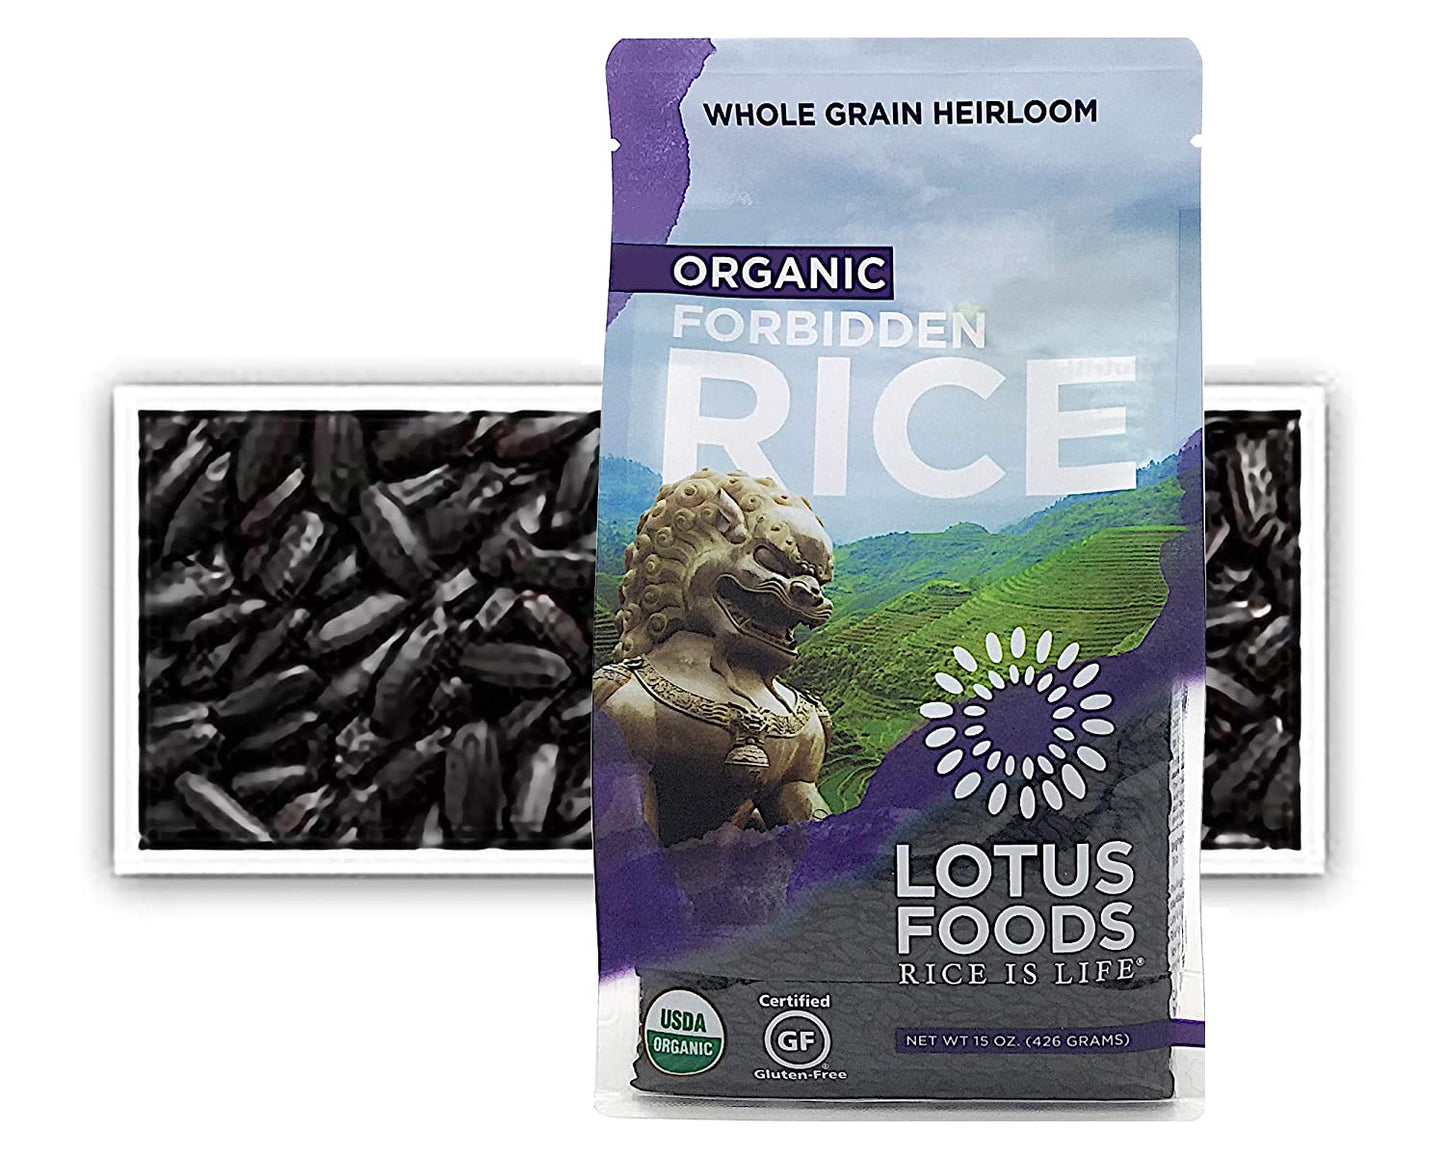 Lotus Foods Gourmet Organic Forbidden Rice, 0.94 Pound (Pack of 6)